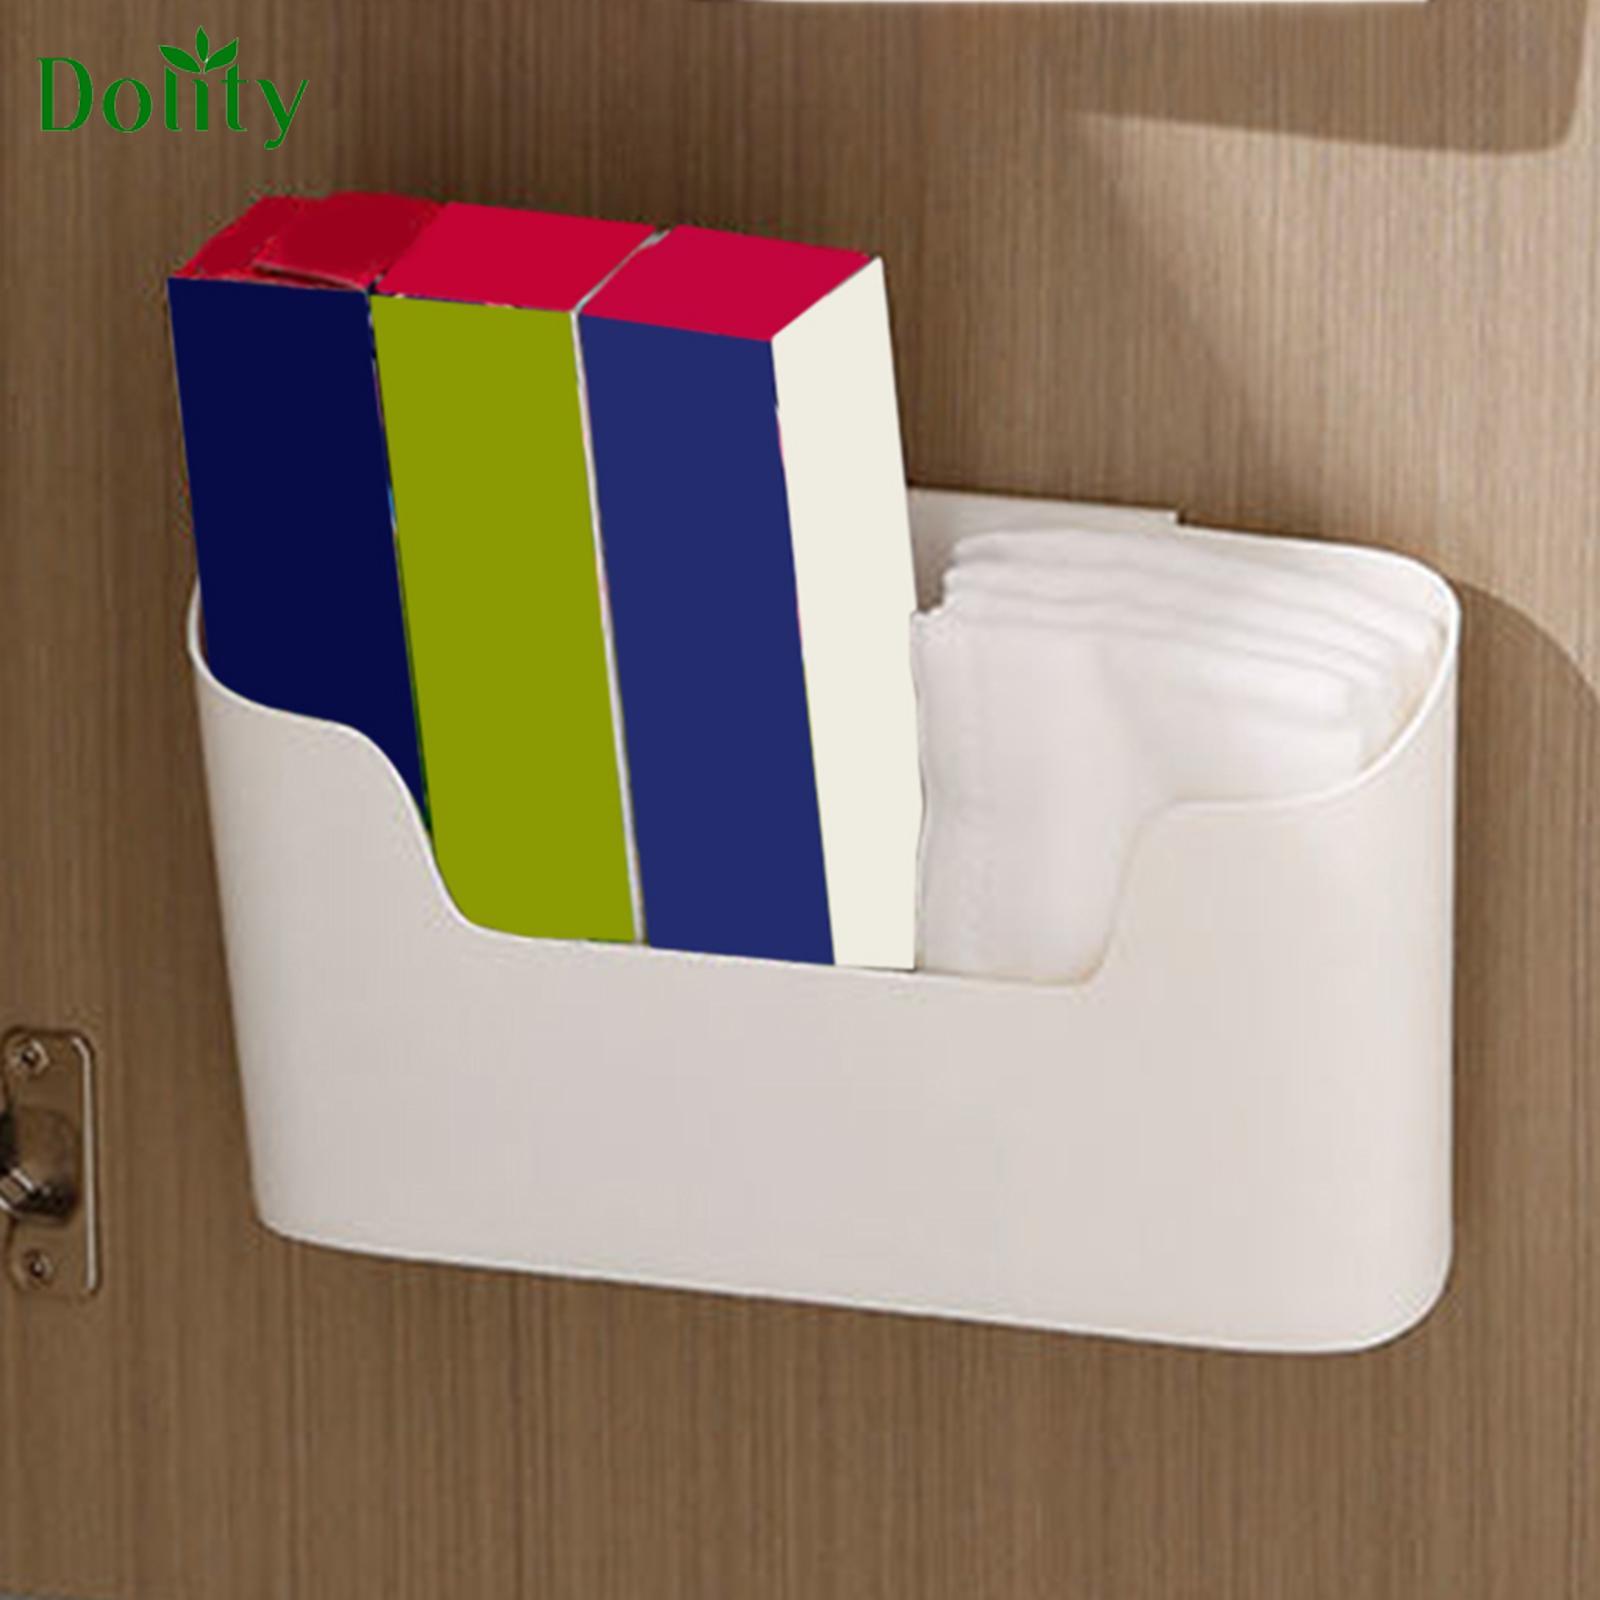 Dolity Kitchen Cabinet Door Storage Box Multipurpose for Utility Room